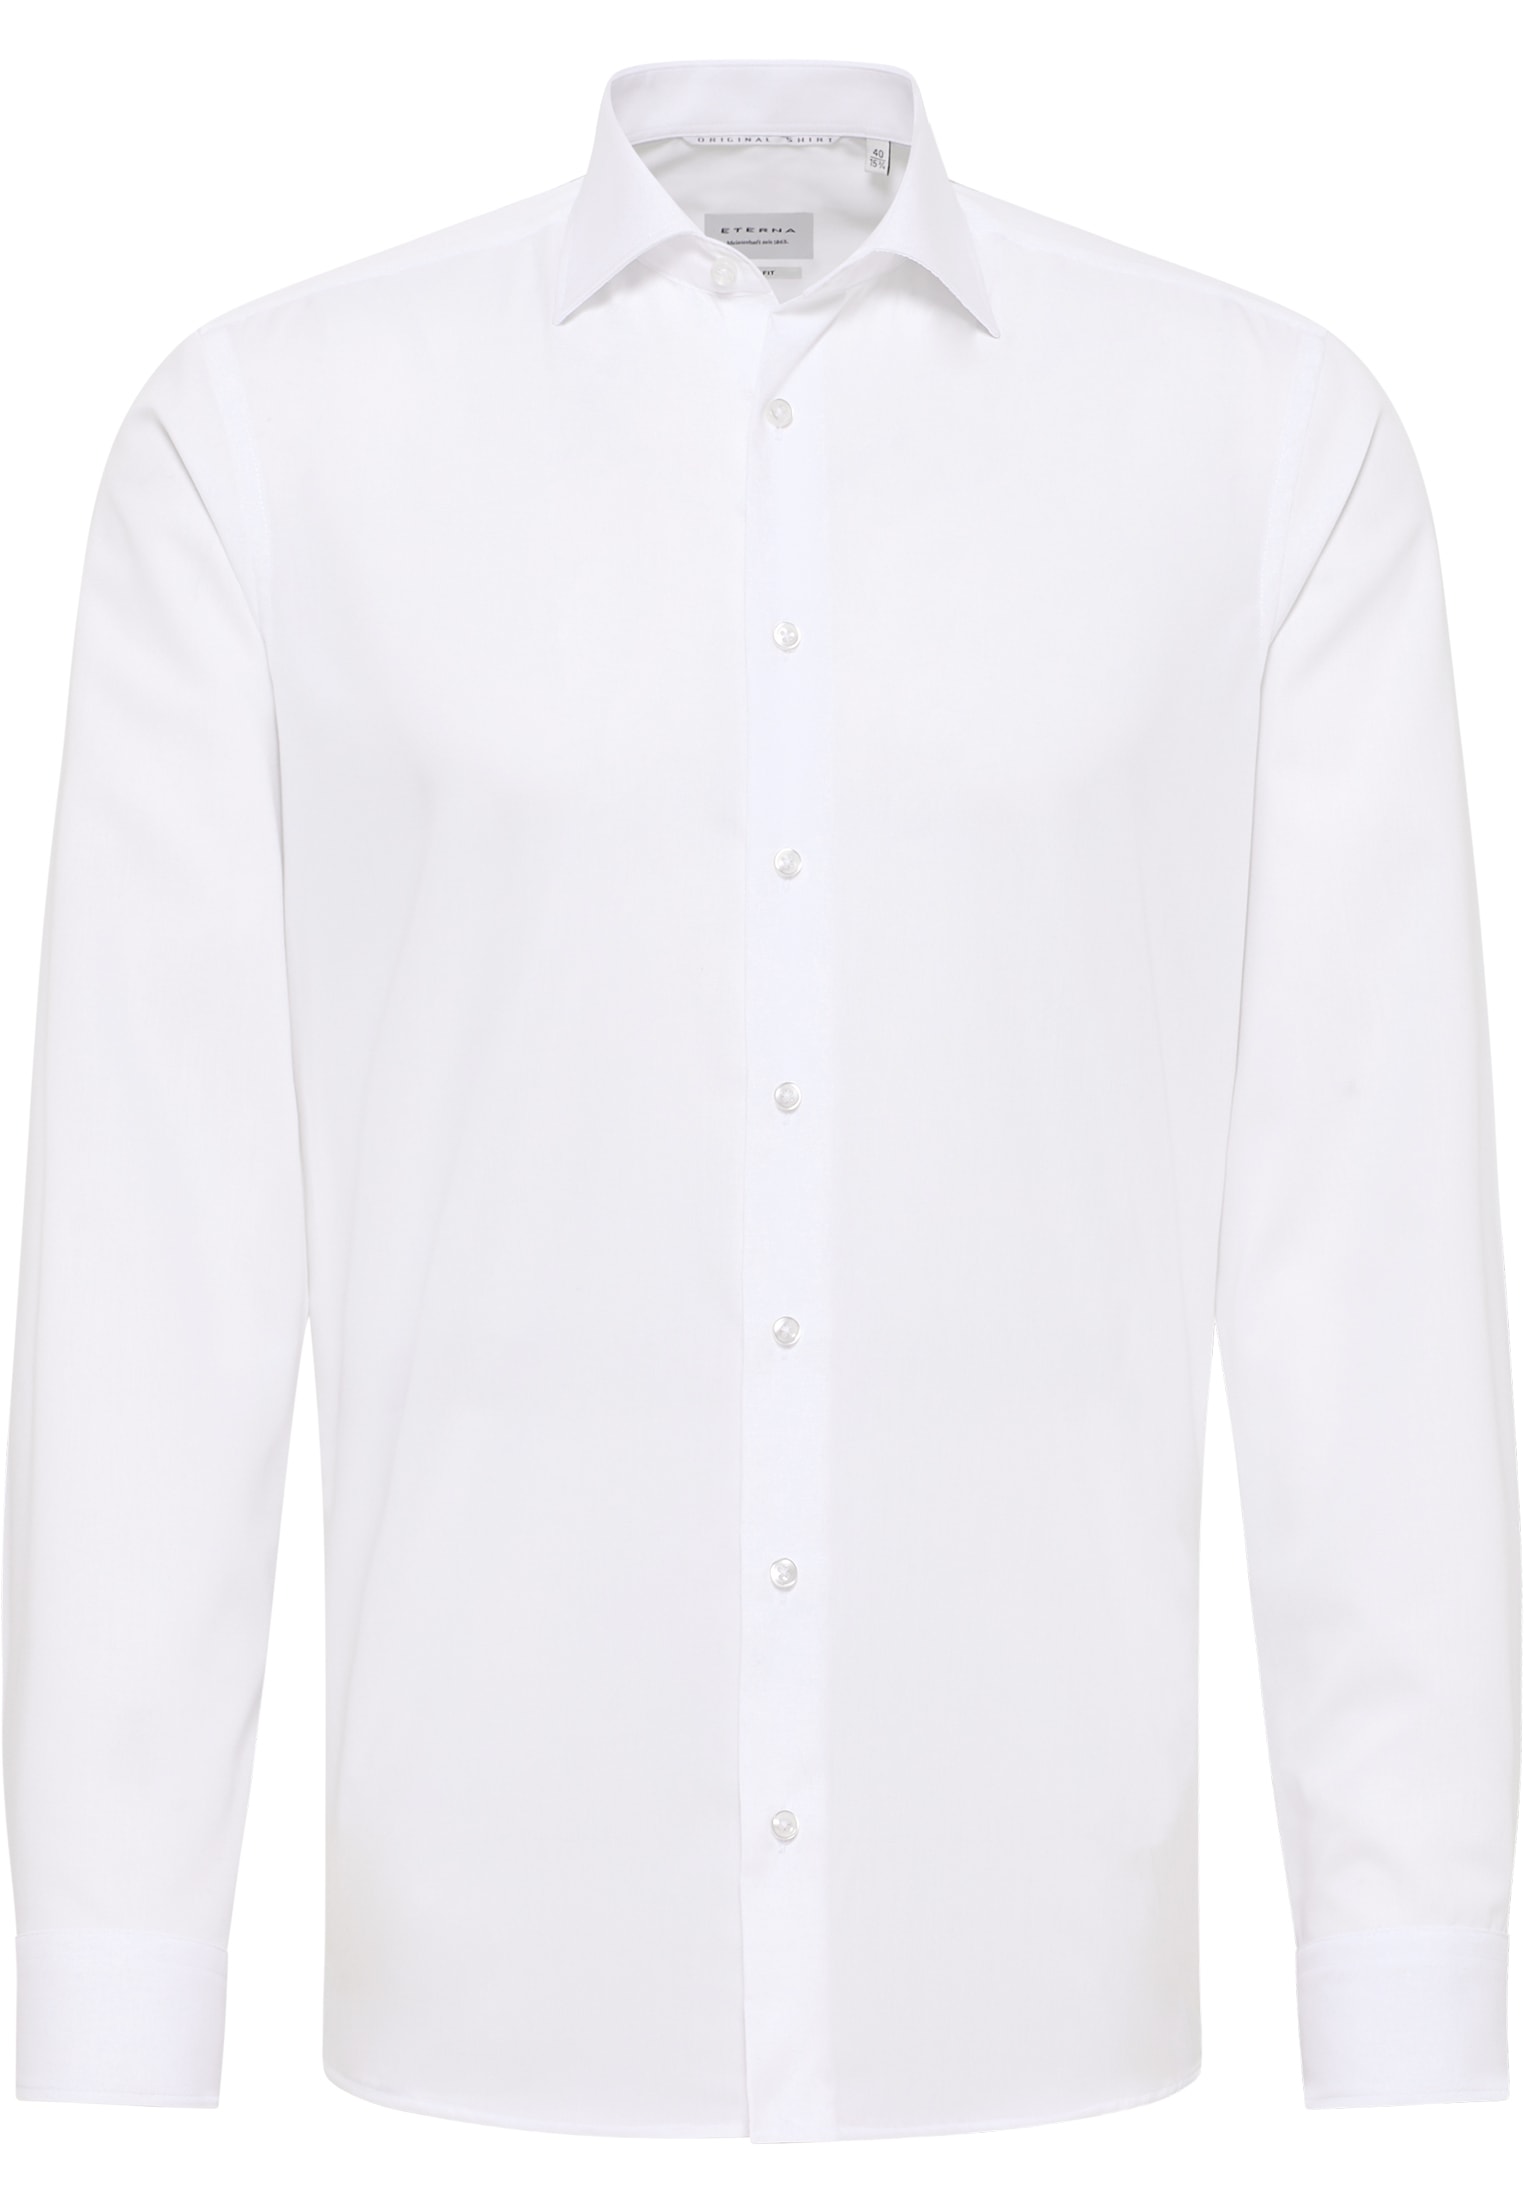 SLIM FIT Original Shirt in wit vlakte